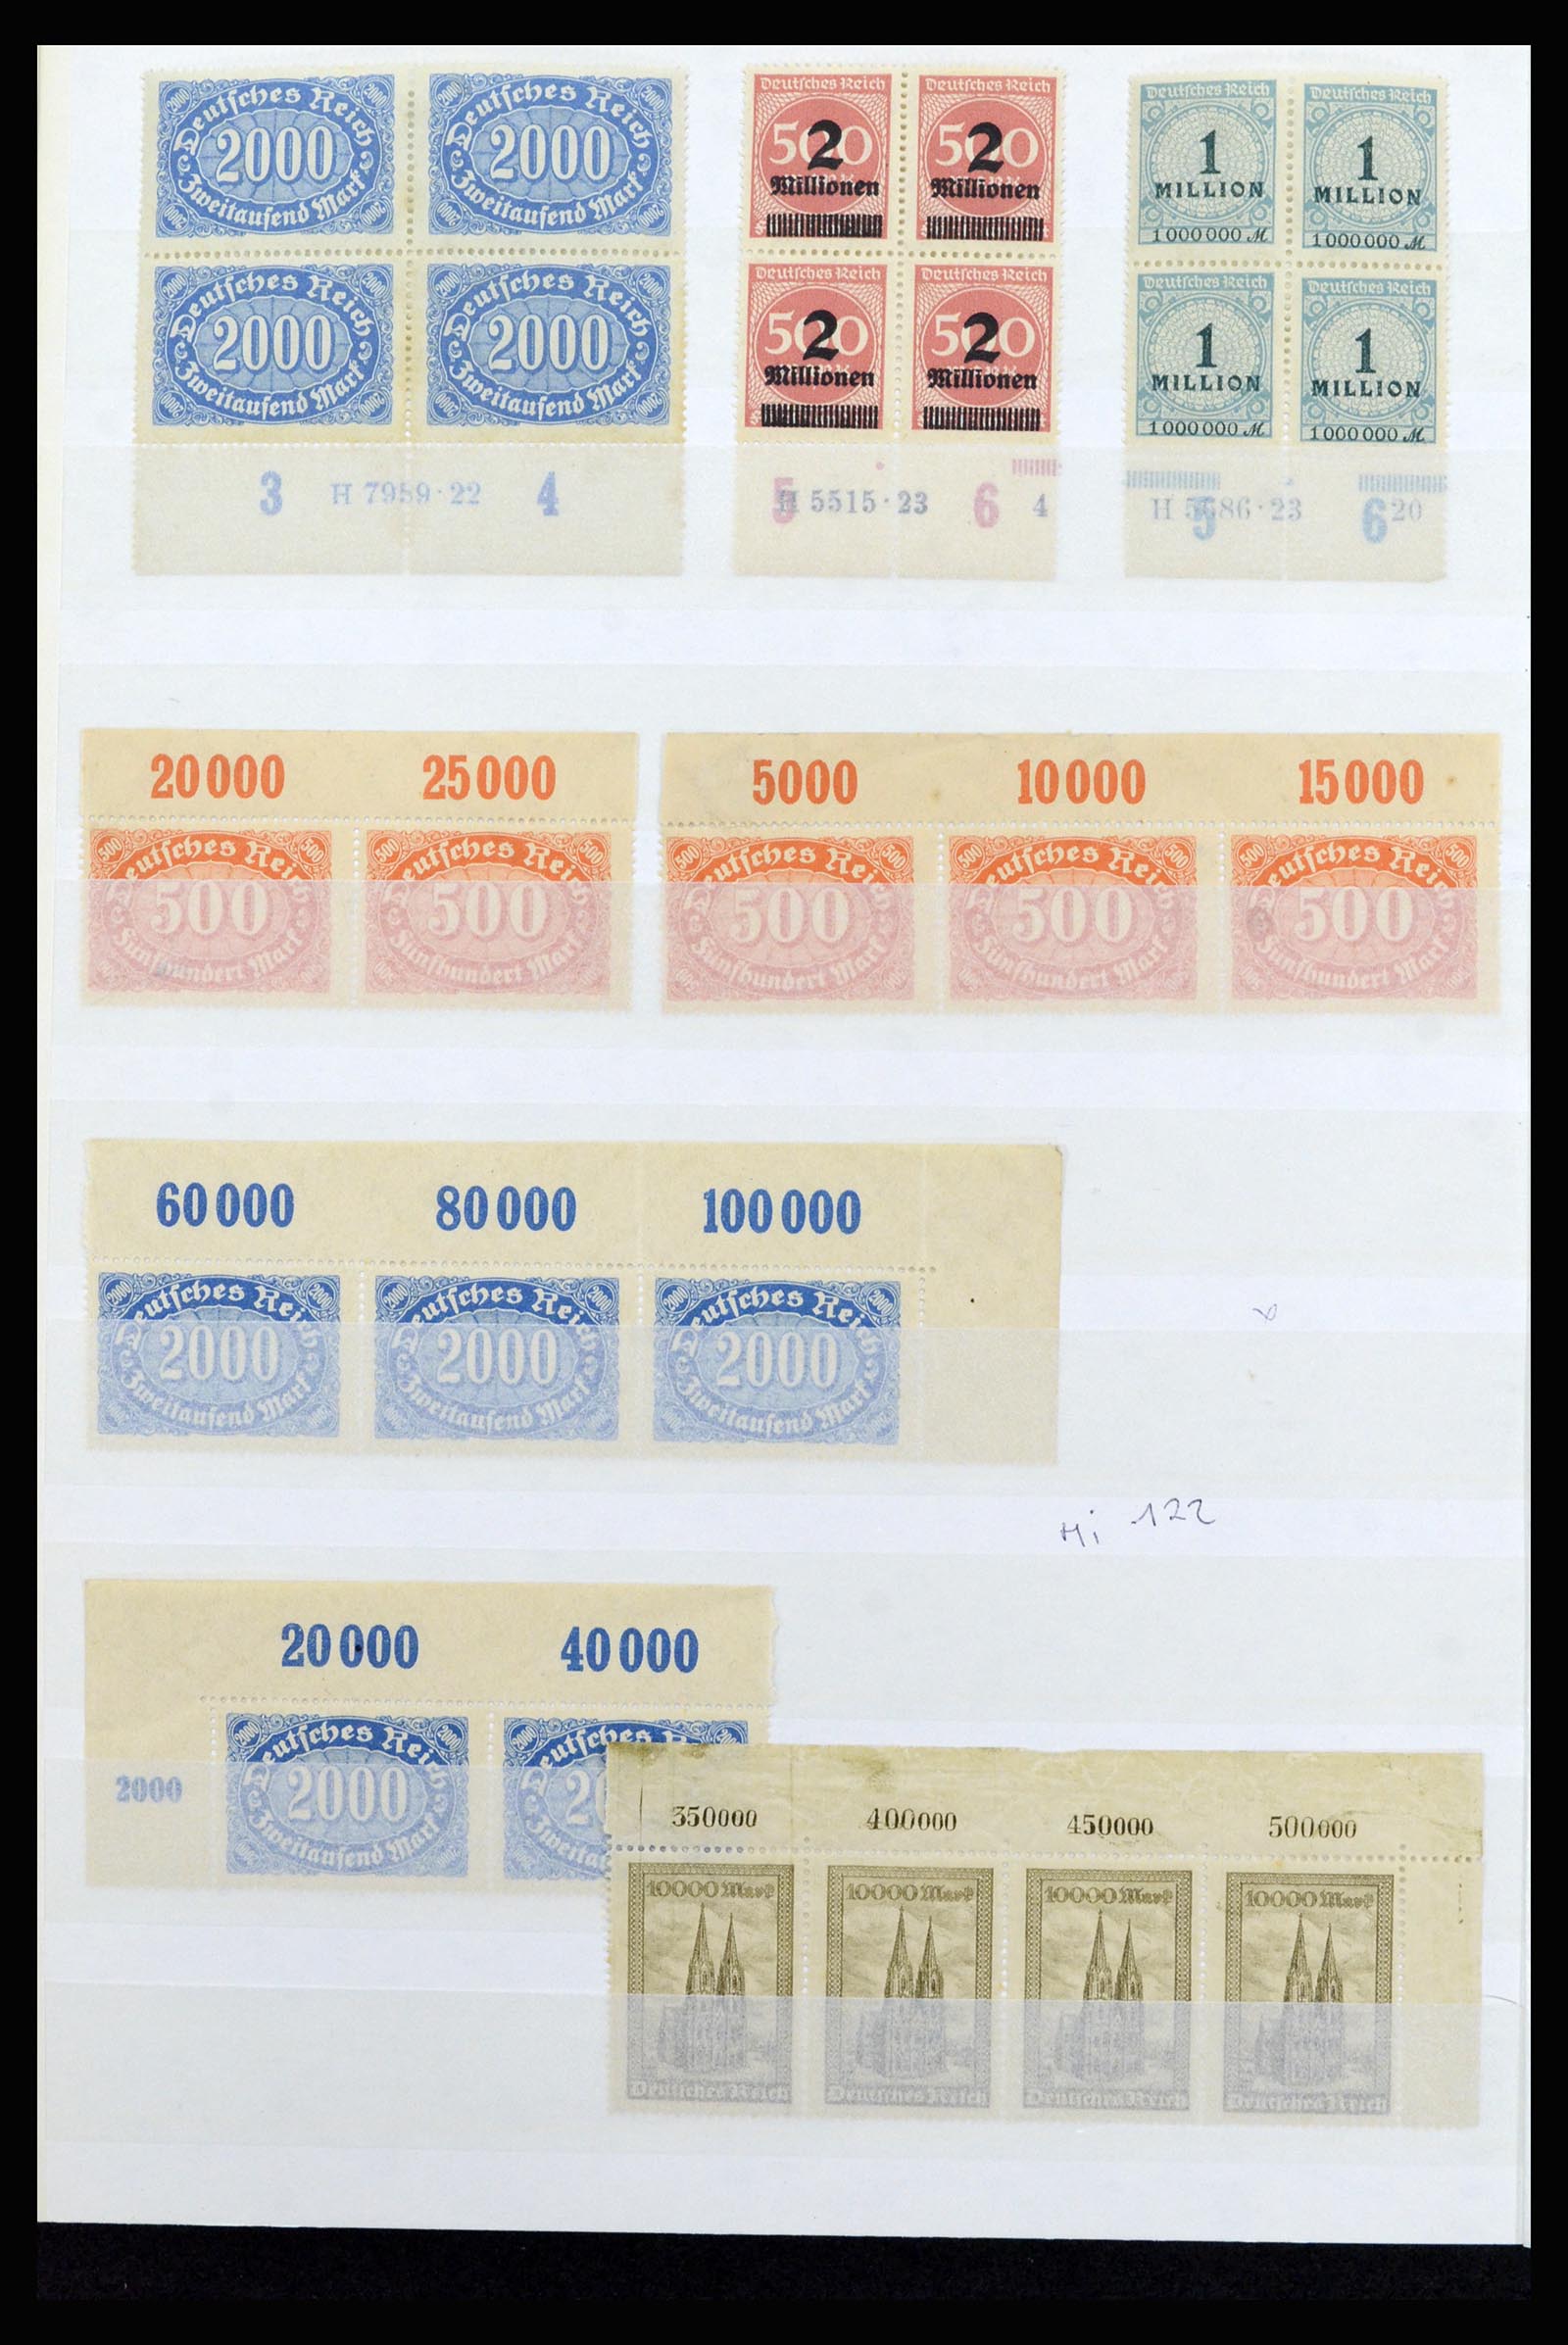 37103 133 - Stamp collection 37103 German Reich 1880-1945.